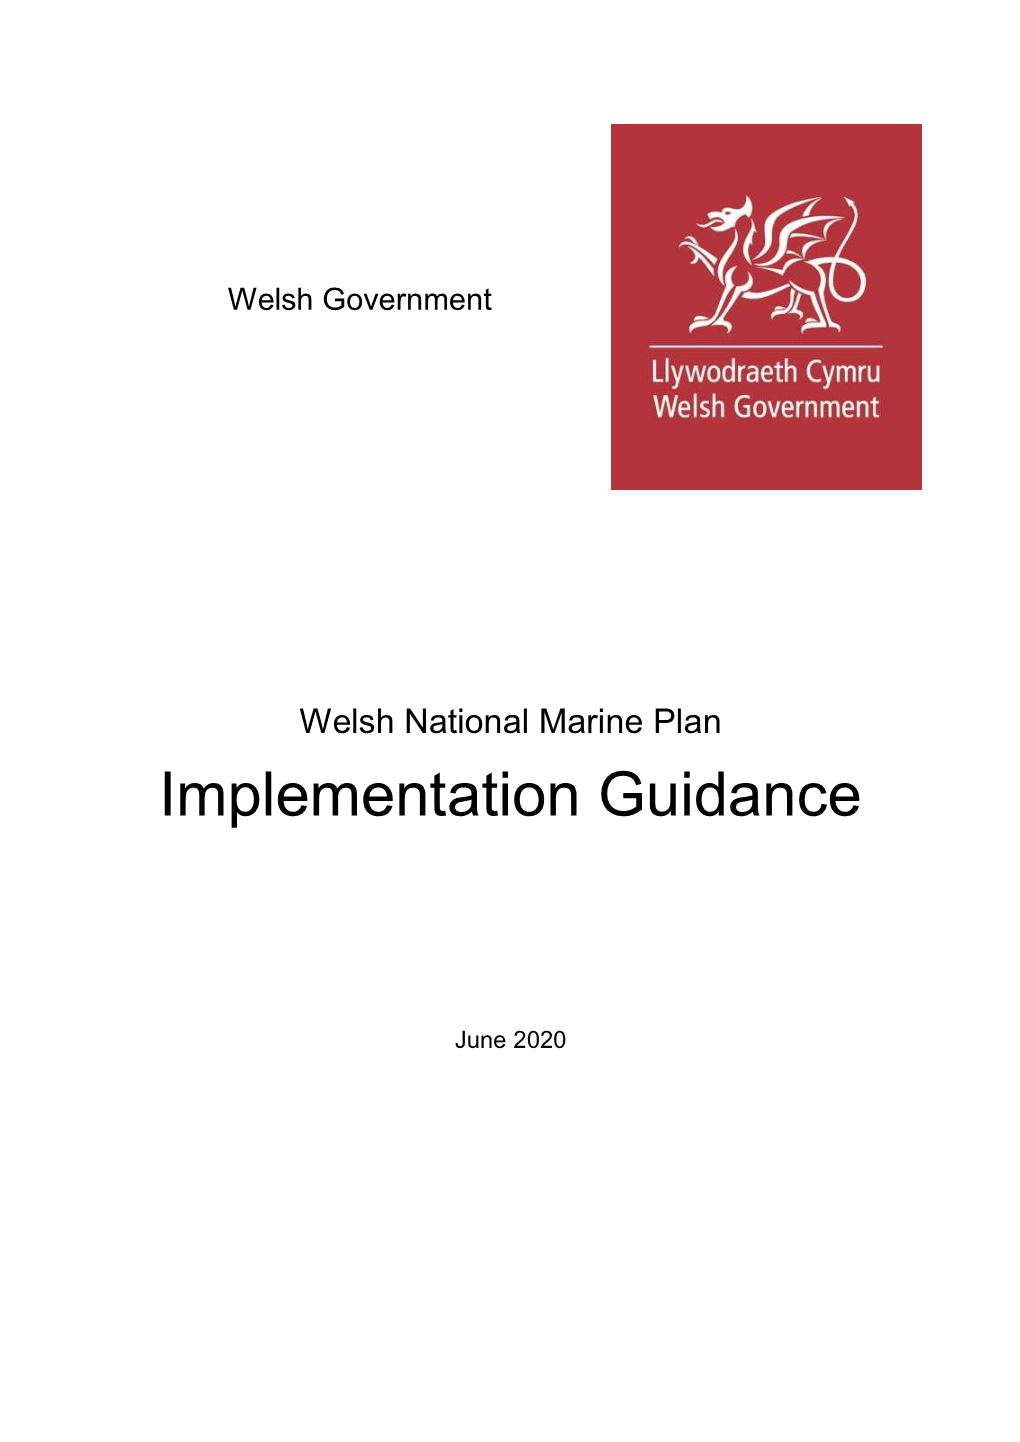 Welsh National Marine Plan: Implementation Guidance